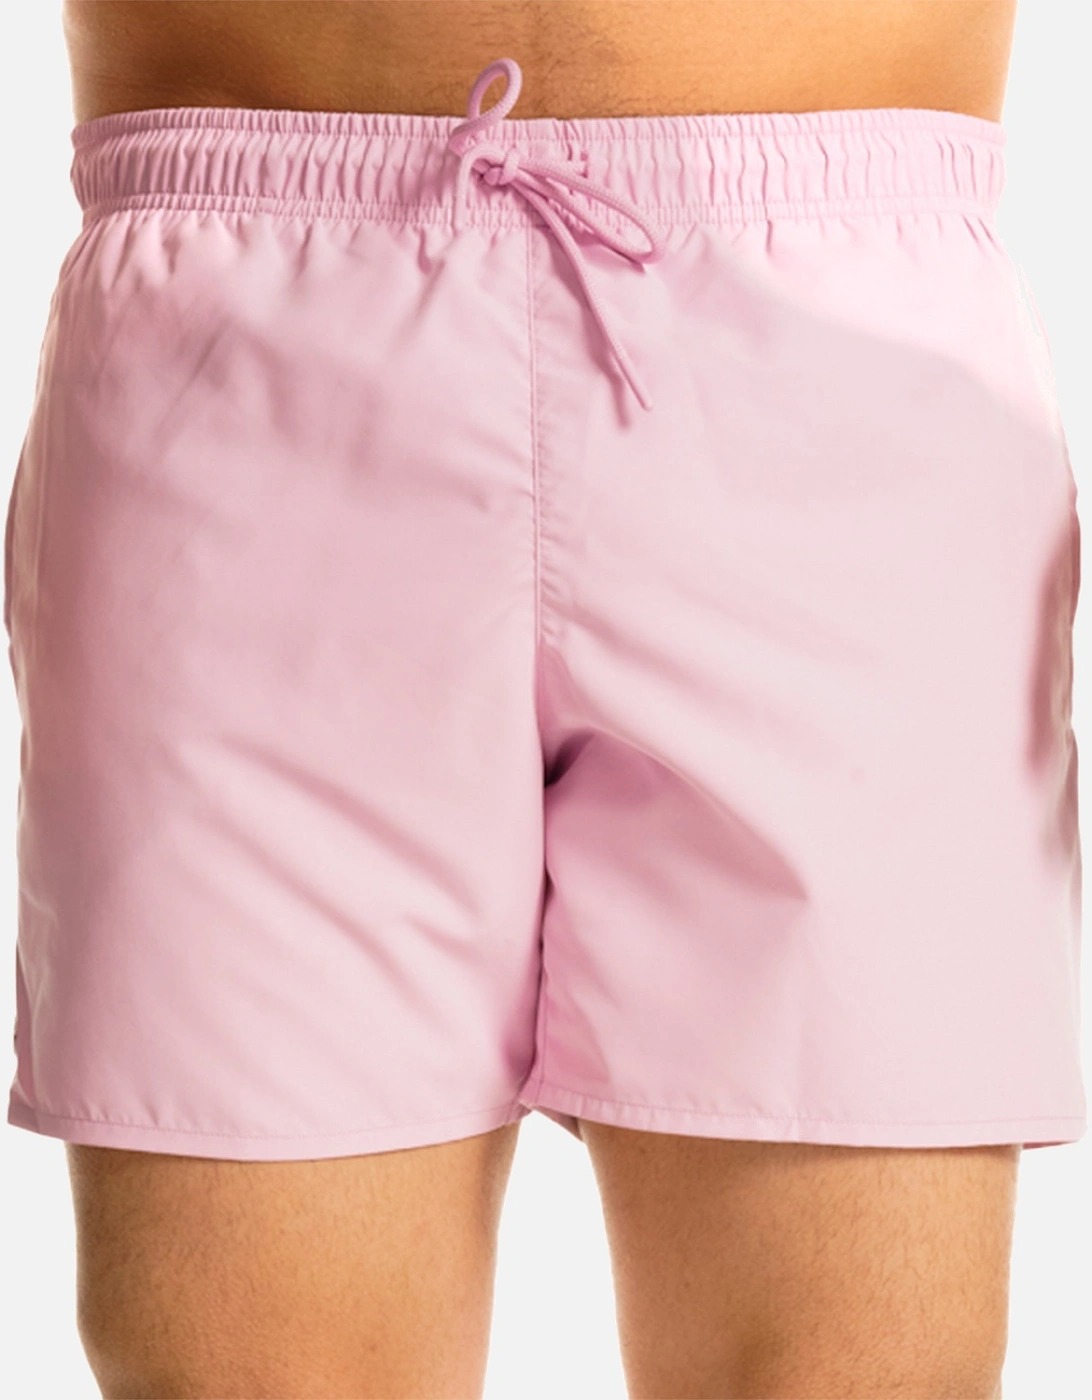 Mens Quick Dry Swim Shorts (Pink/Green)